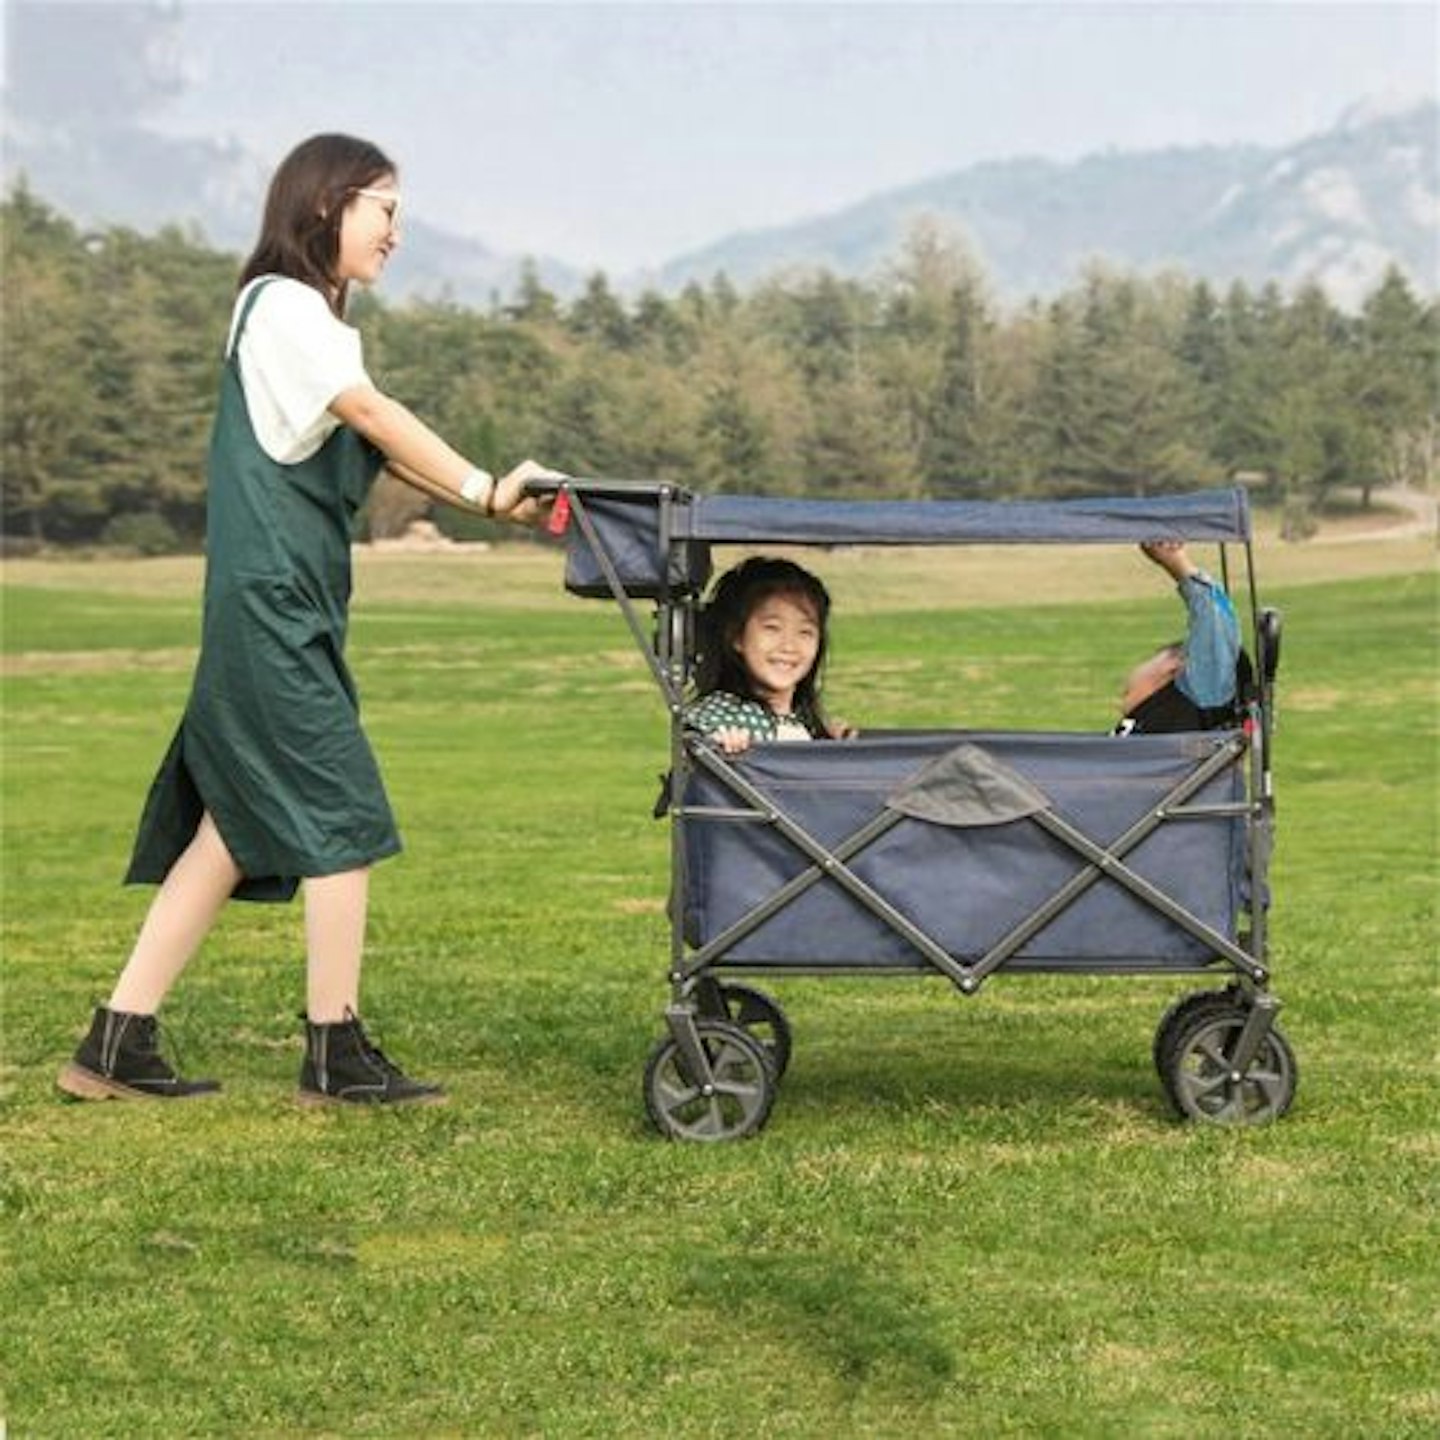 ZZCX Wagon Stroller for Kids